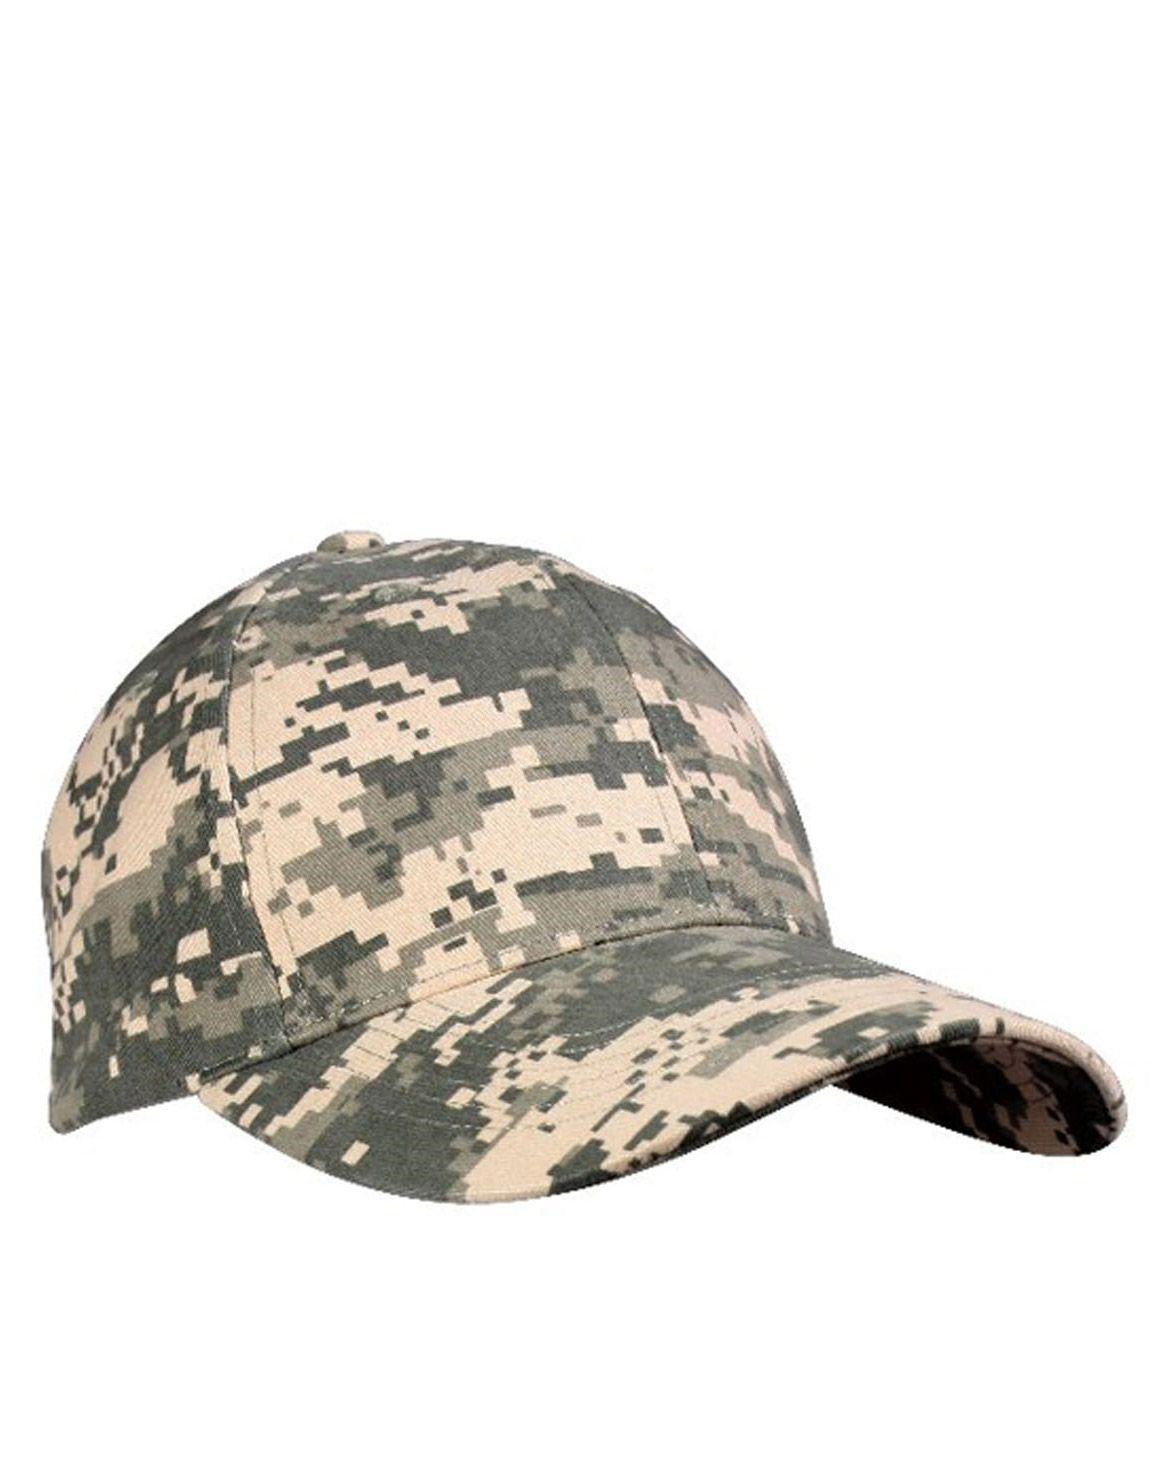 Rothco Supreme Low Profile Cap (ACU Camo, One Size)